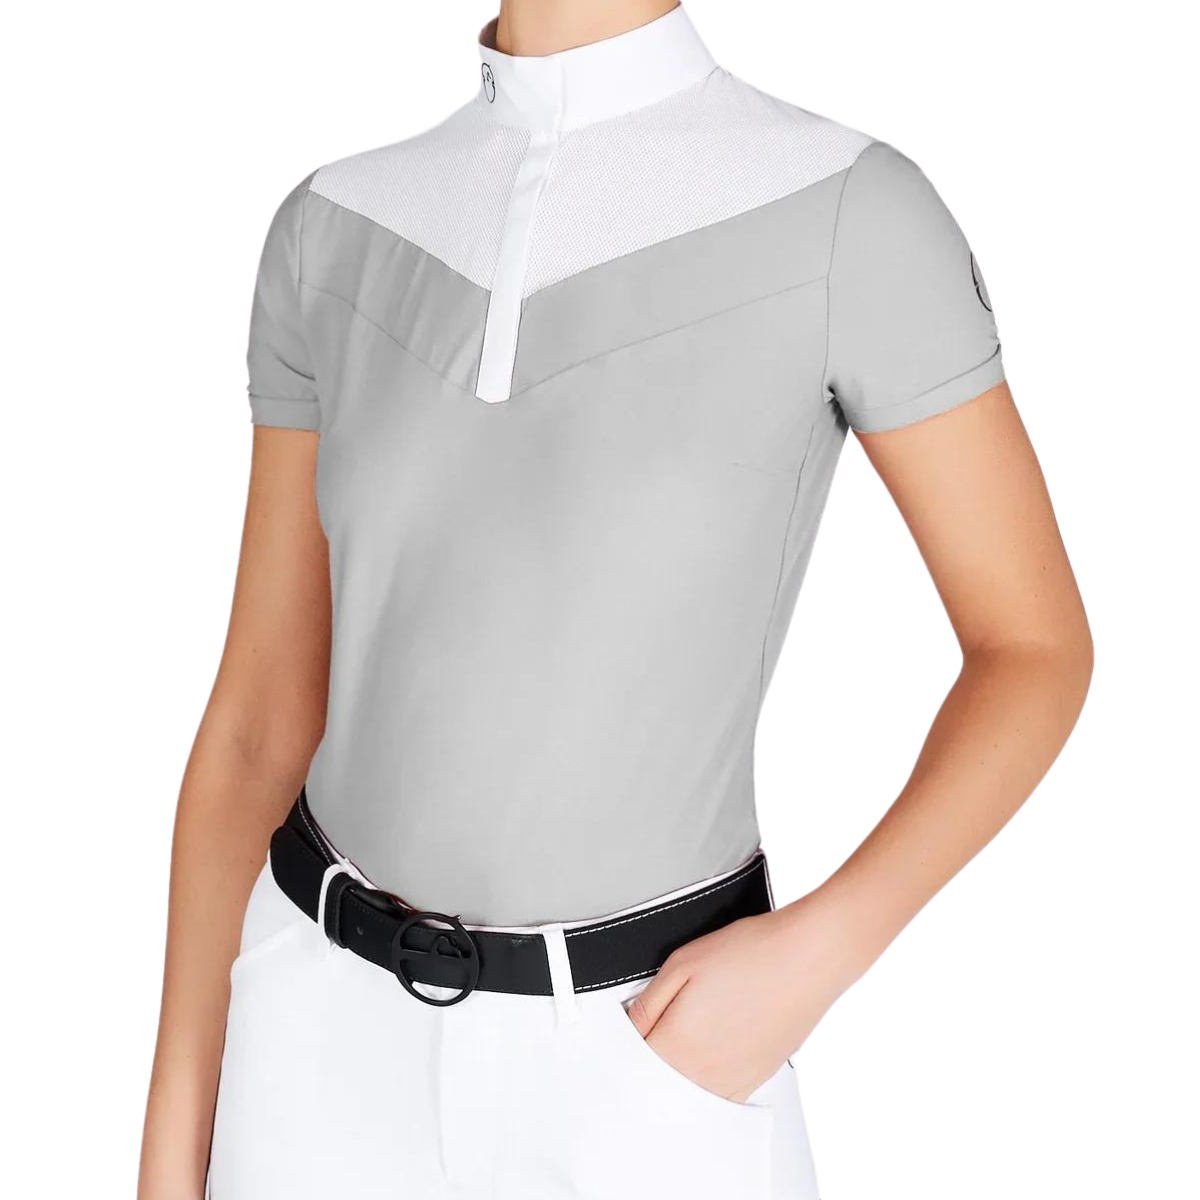 Vestrum Simeri Short Sleeve Show Shirt in Light Grey/White - Women's XS